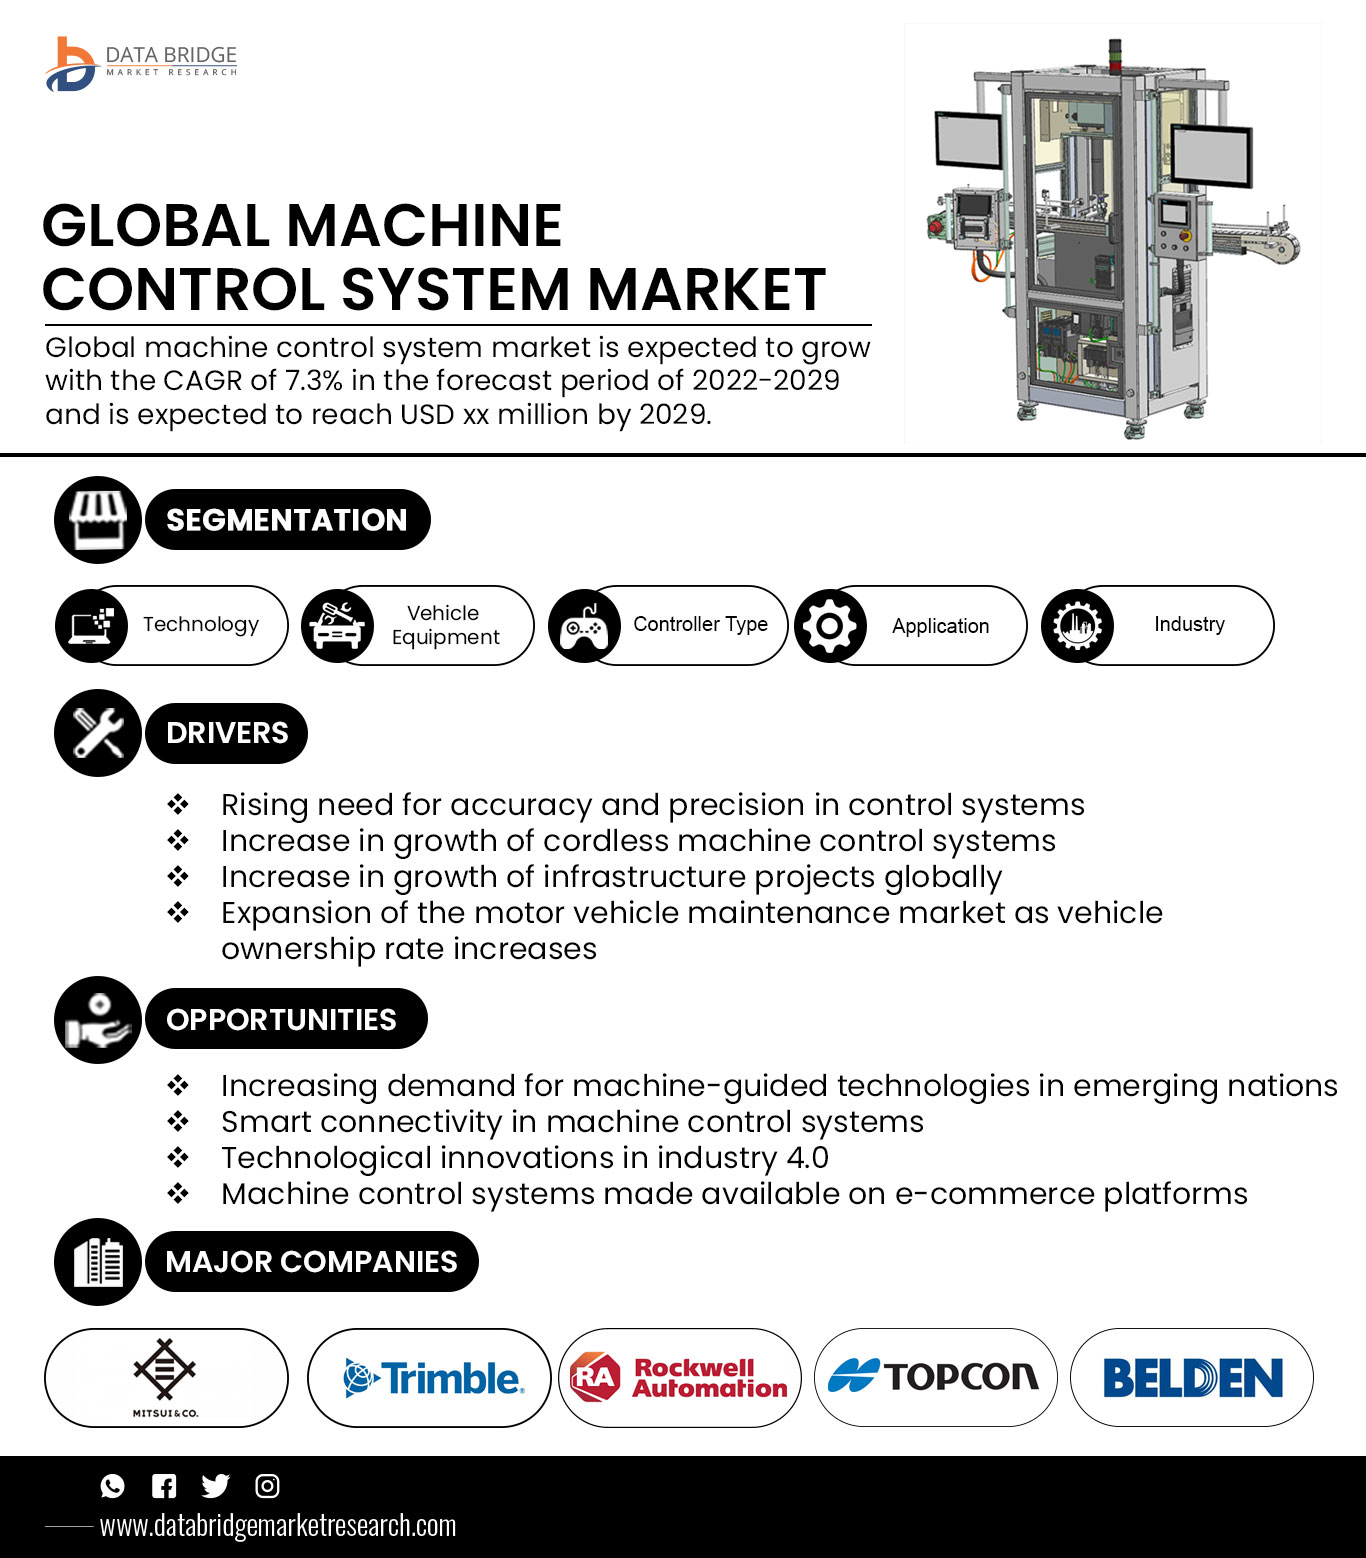 Machine Control System Market